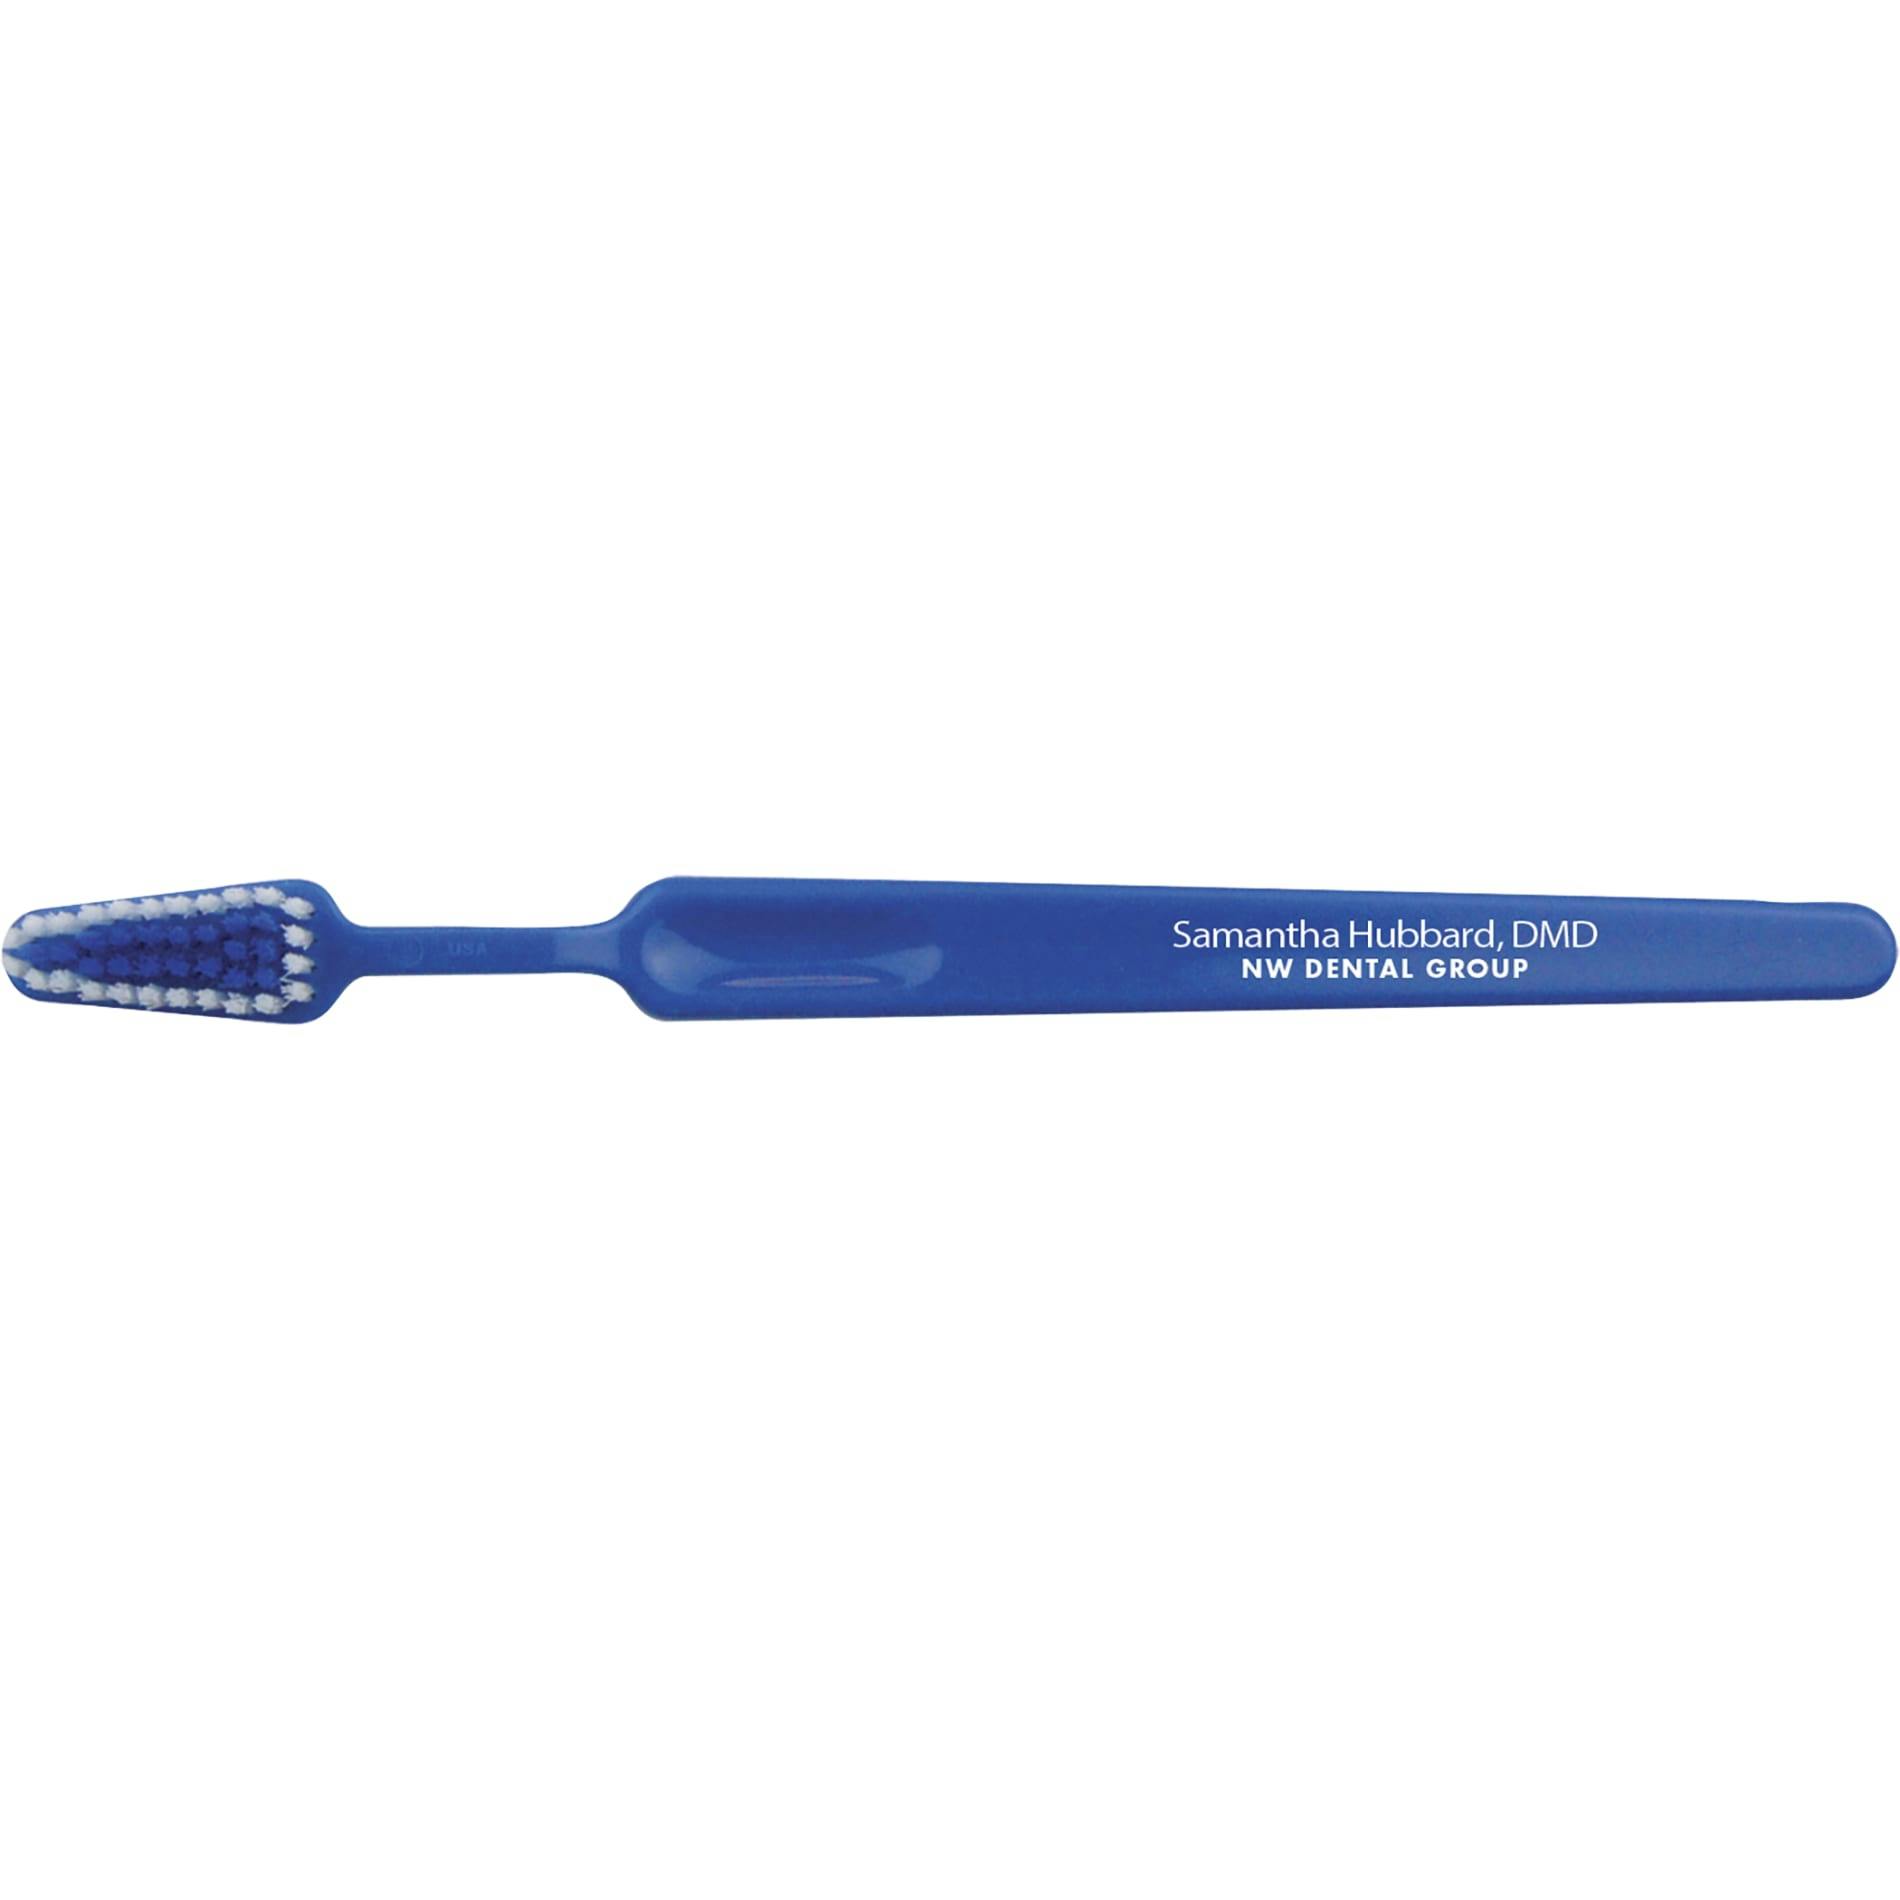 Signature Soft Toothbrush - additional Image 2